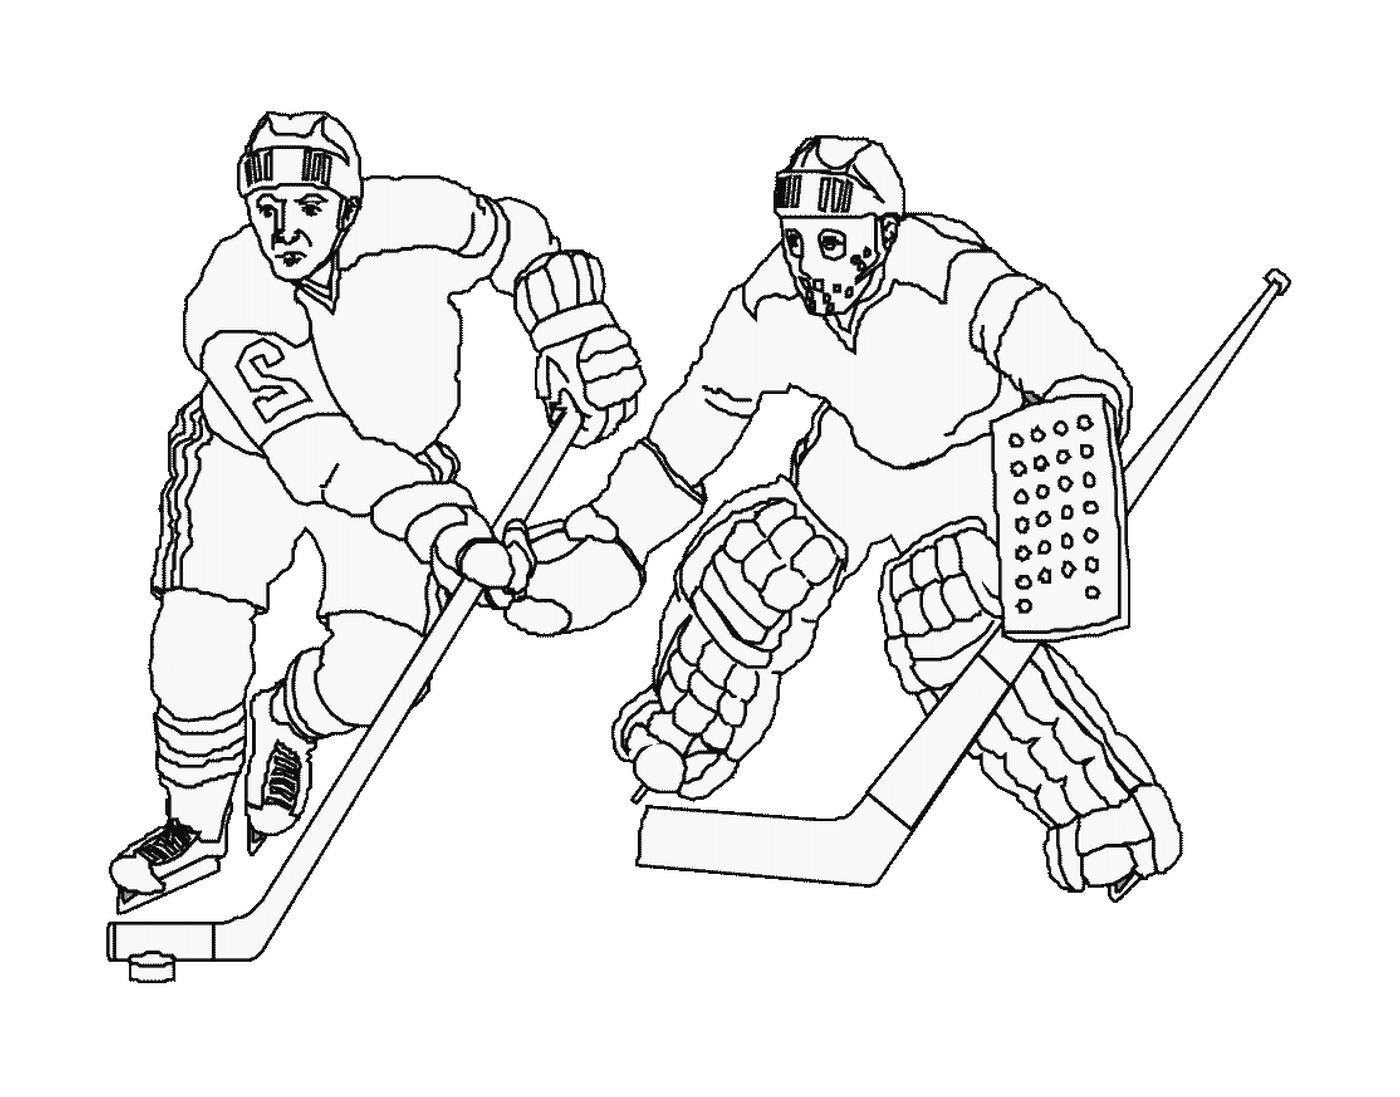  Juegos Hockey intenso juego 